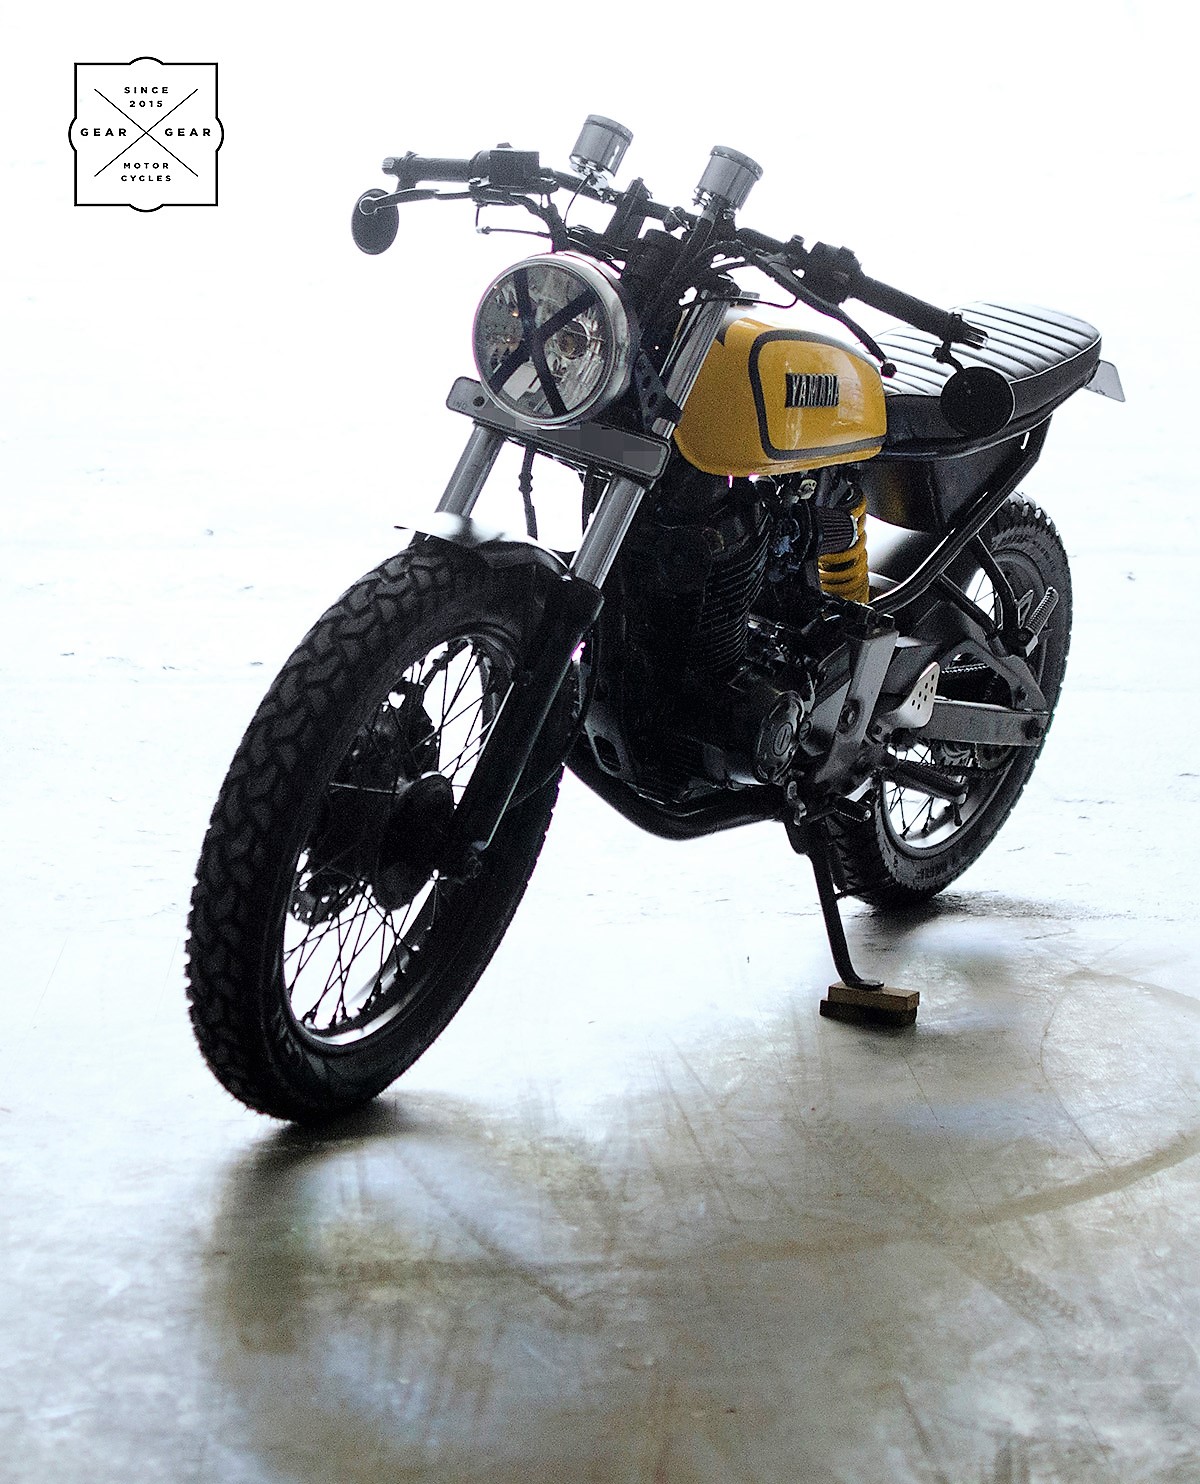 Yamaha Bikes Rx100 Price 2020 Model